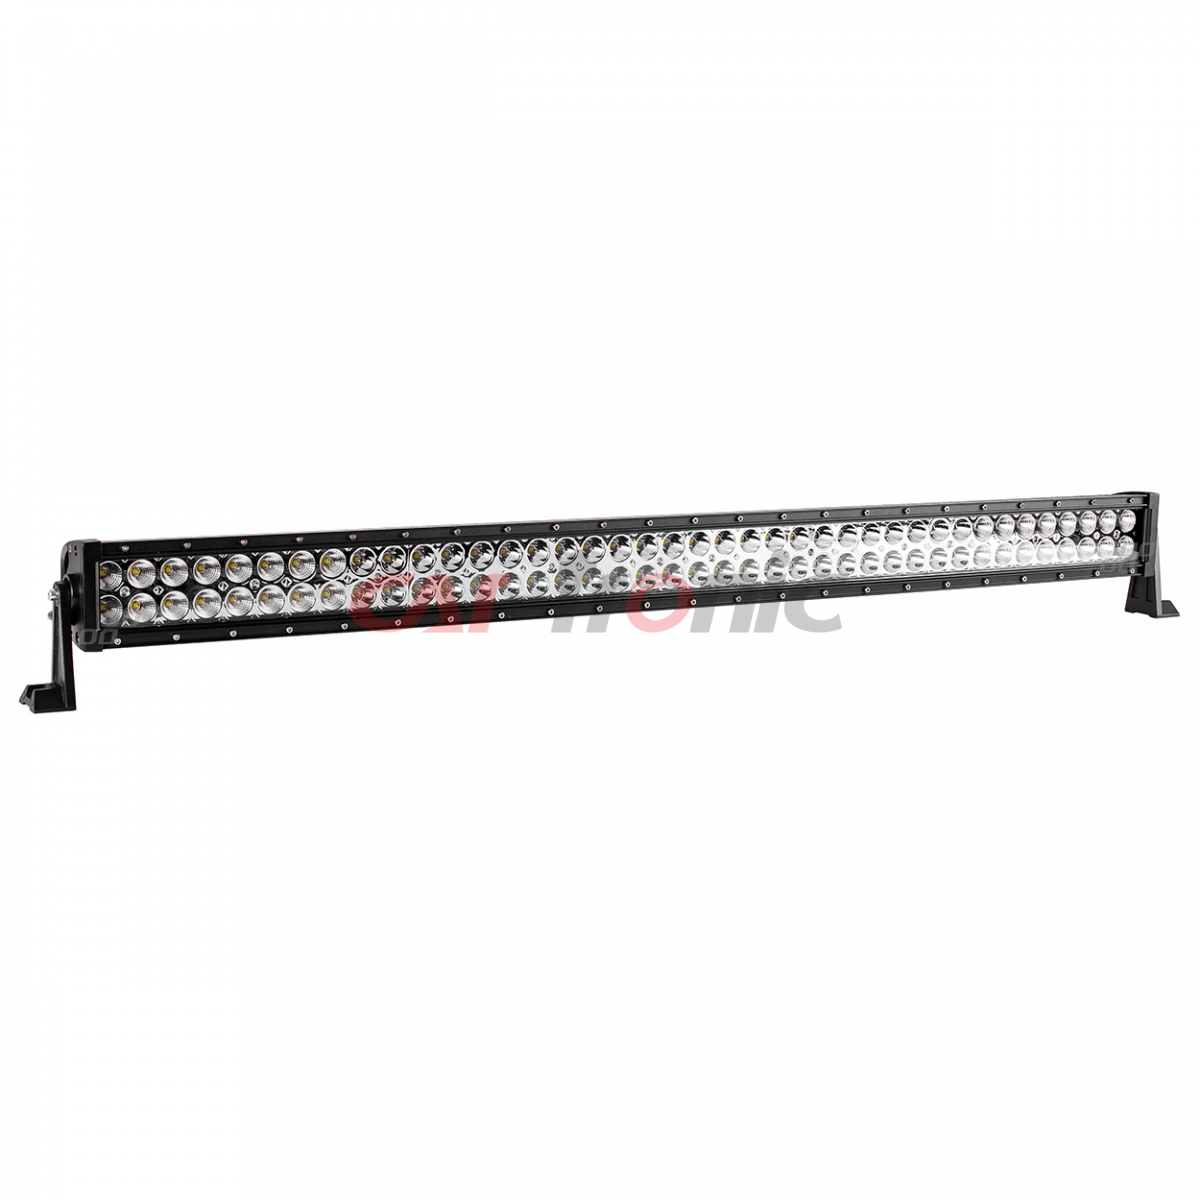 Lampa robocza panelowa LED BAR prosta 113 cm 9-36V AMIO-02440 AWL26